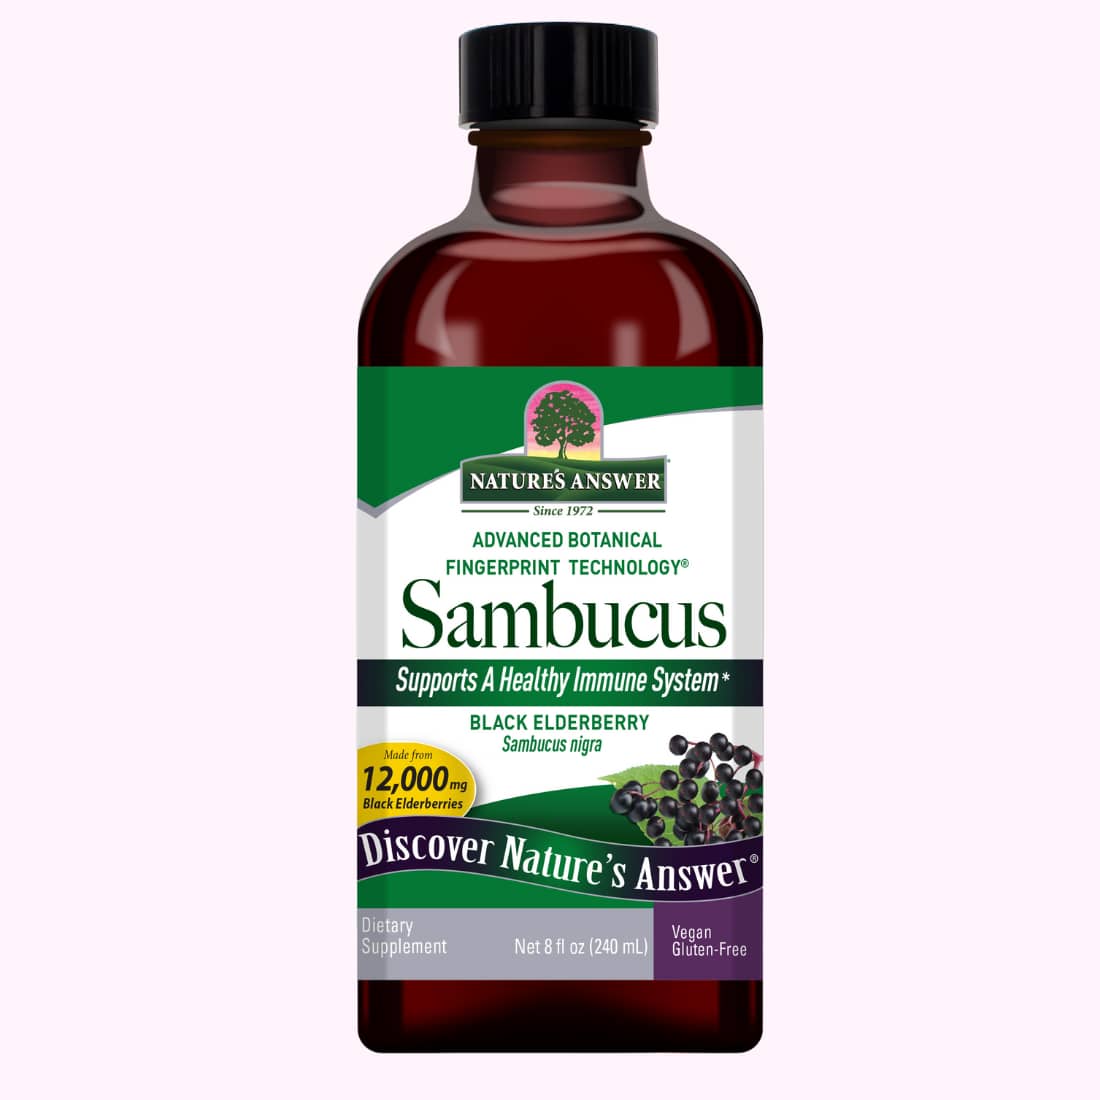 Sambucus Gummies